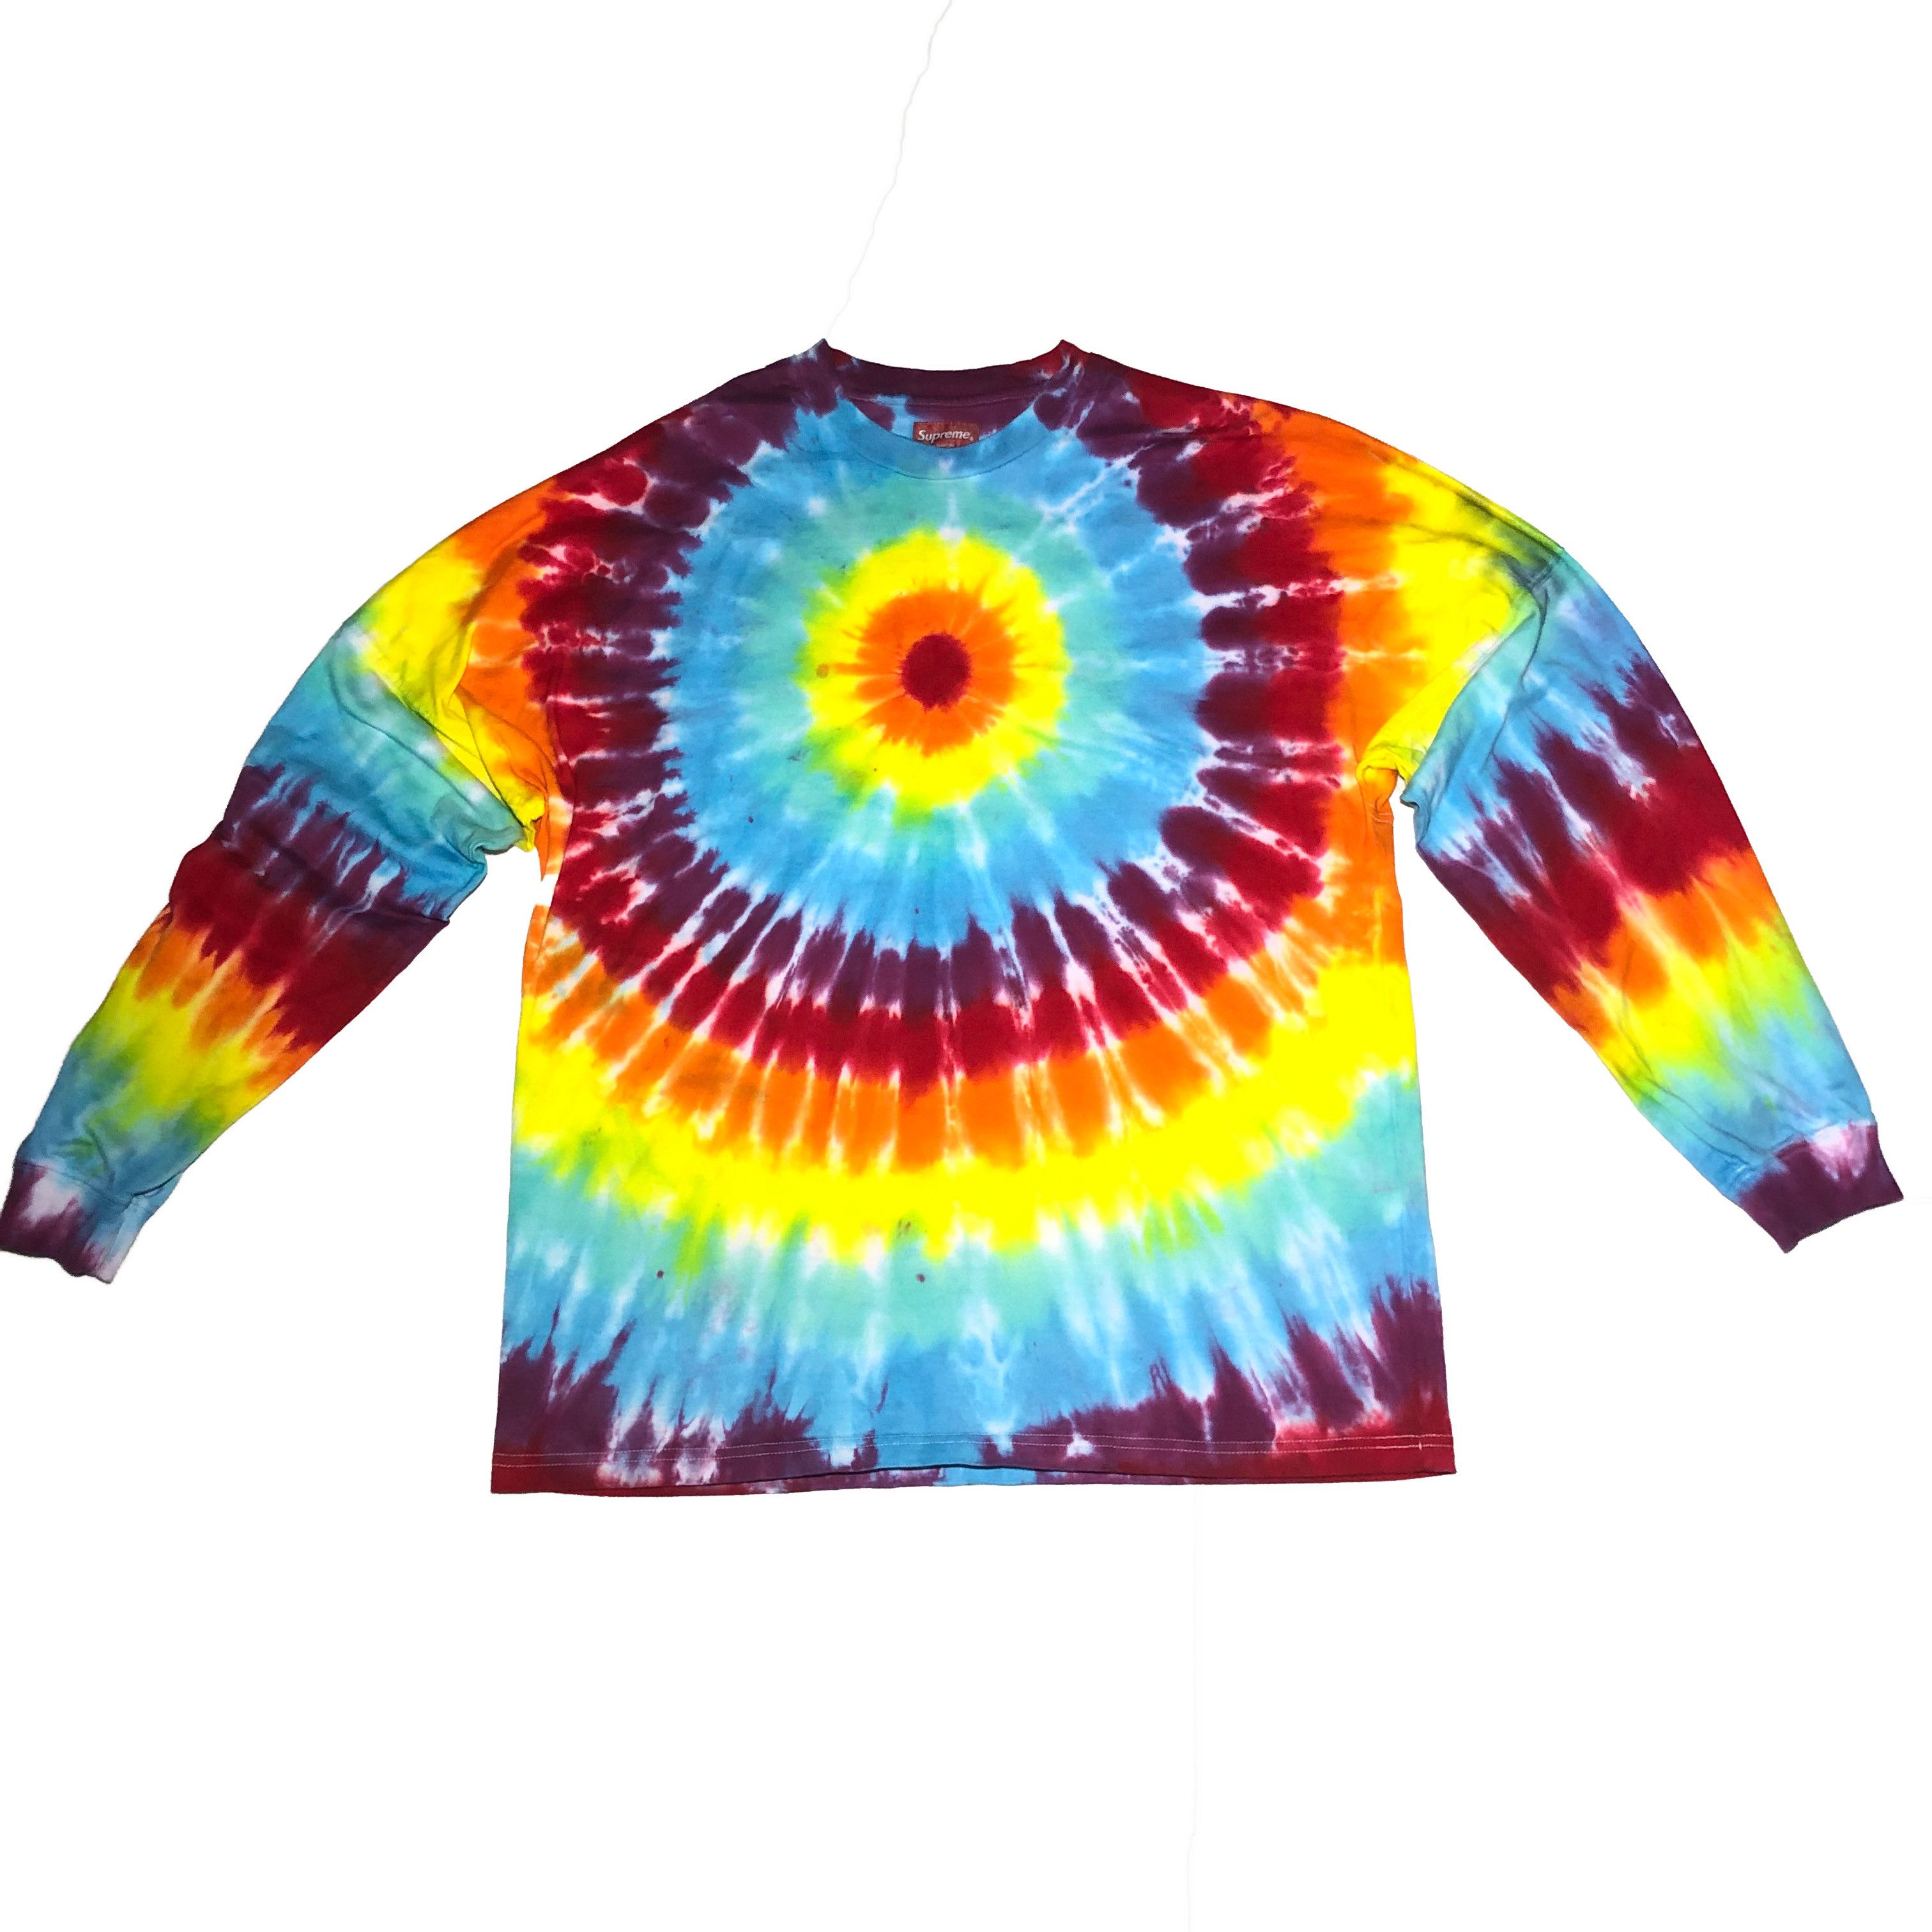 Supreme Medium - Supreme Rainbow Tie-dye Overdyed L/S Top Shirt Size US M / EU 48-50 / 2 - 2 Preview